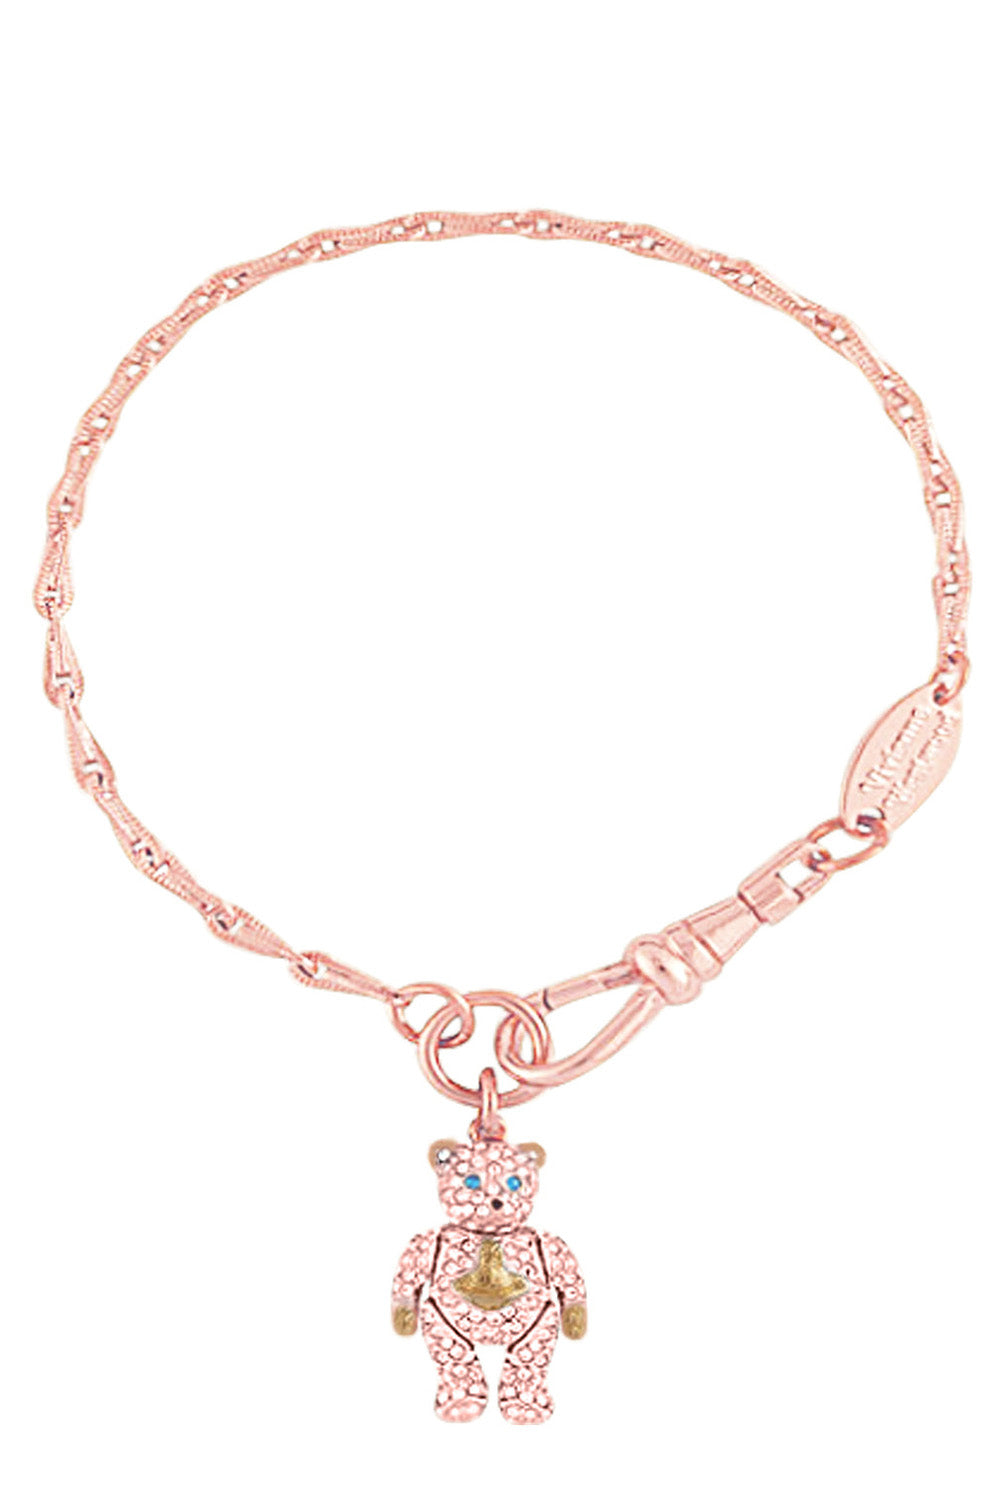 Vivienne Charm Bracelet Monogram - Women - Fashion Jewelry